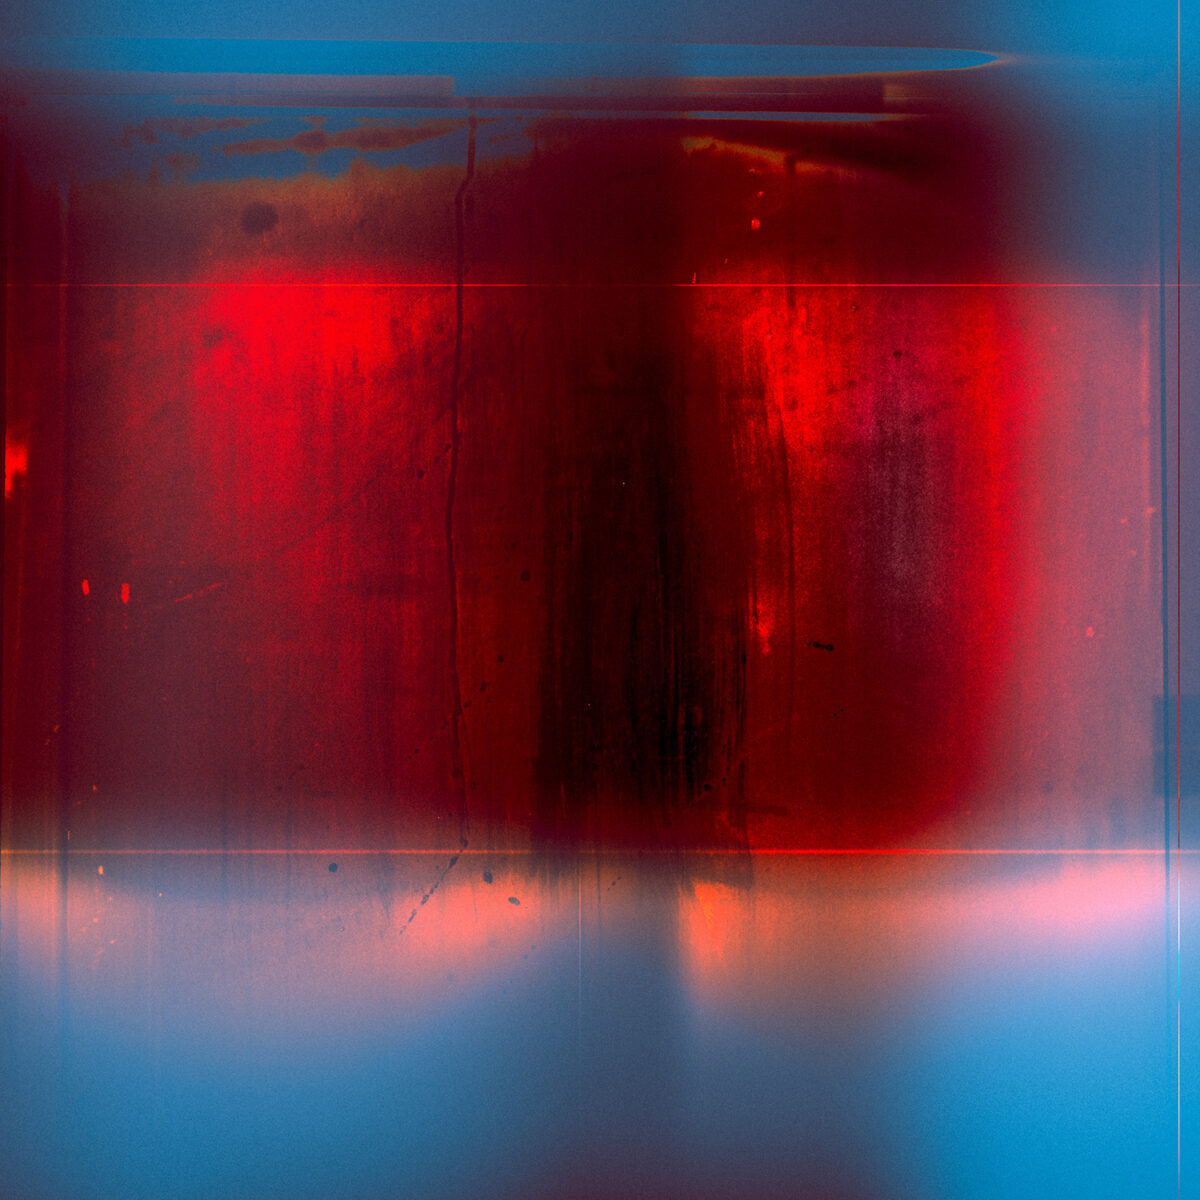 Joris Graaf, The Bright Box, Digitally processed photograph, 2020